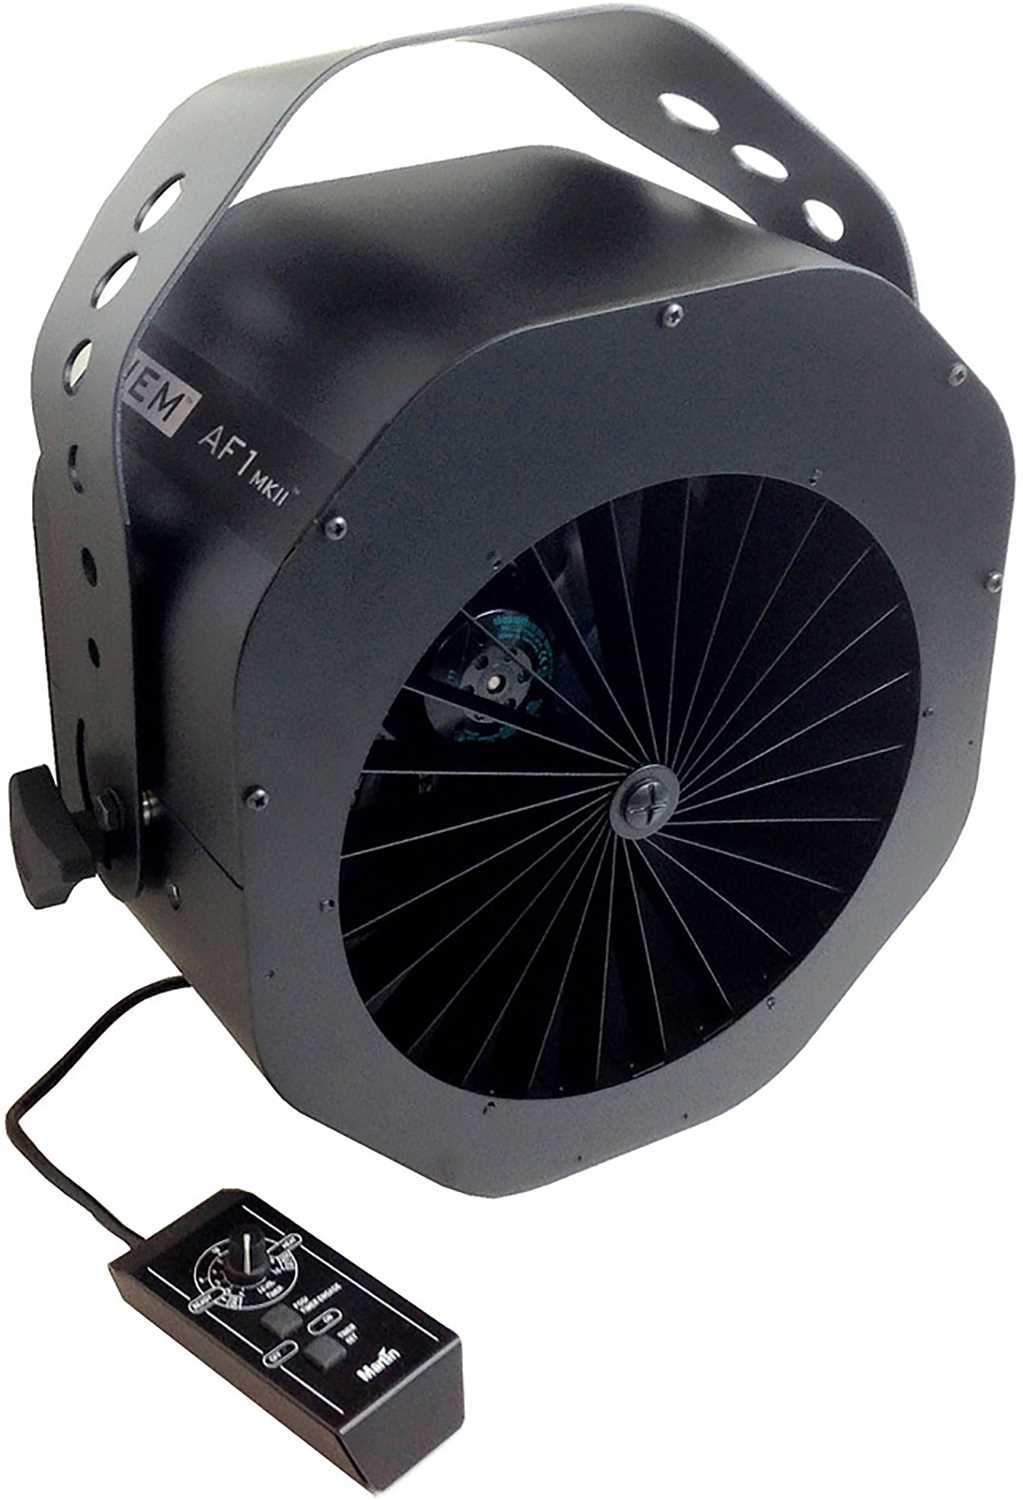 Martin JEM AF-1 MkII Compact DMX Effect Fan - PSSL ProSound and Stage Lighting